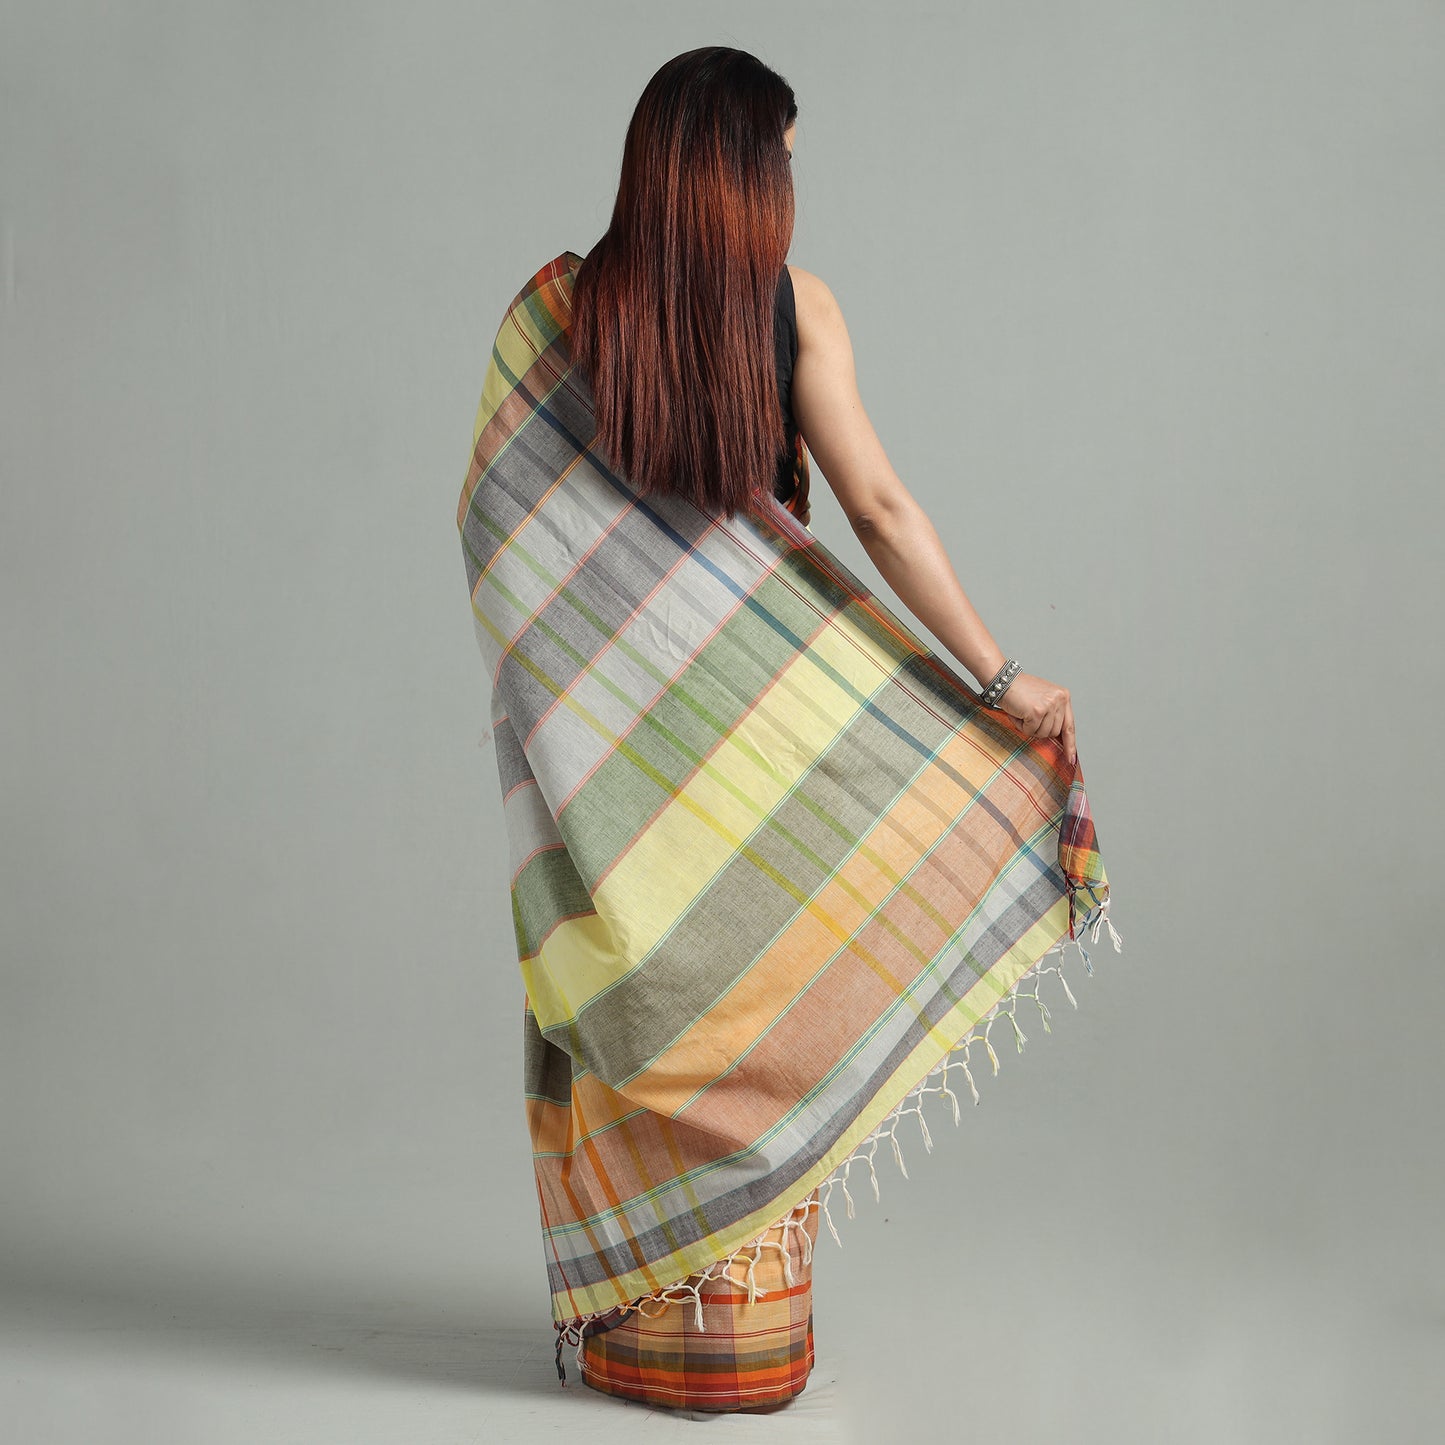 Multicolor - Birbhum Pure Handloom Gamchha Pure Cotton Saree 40